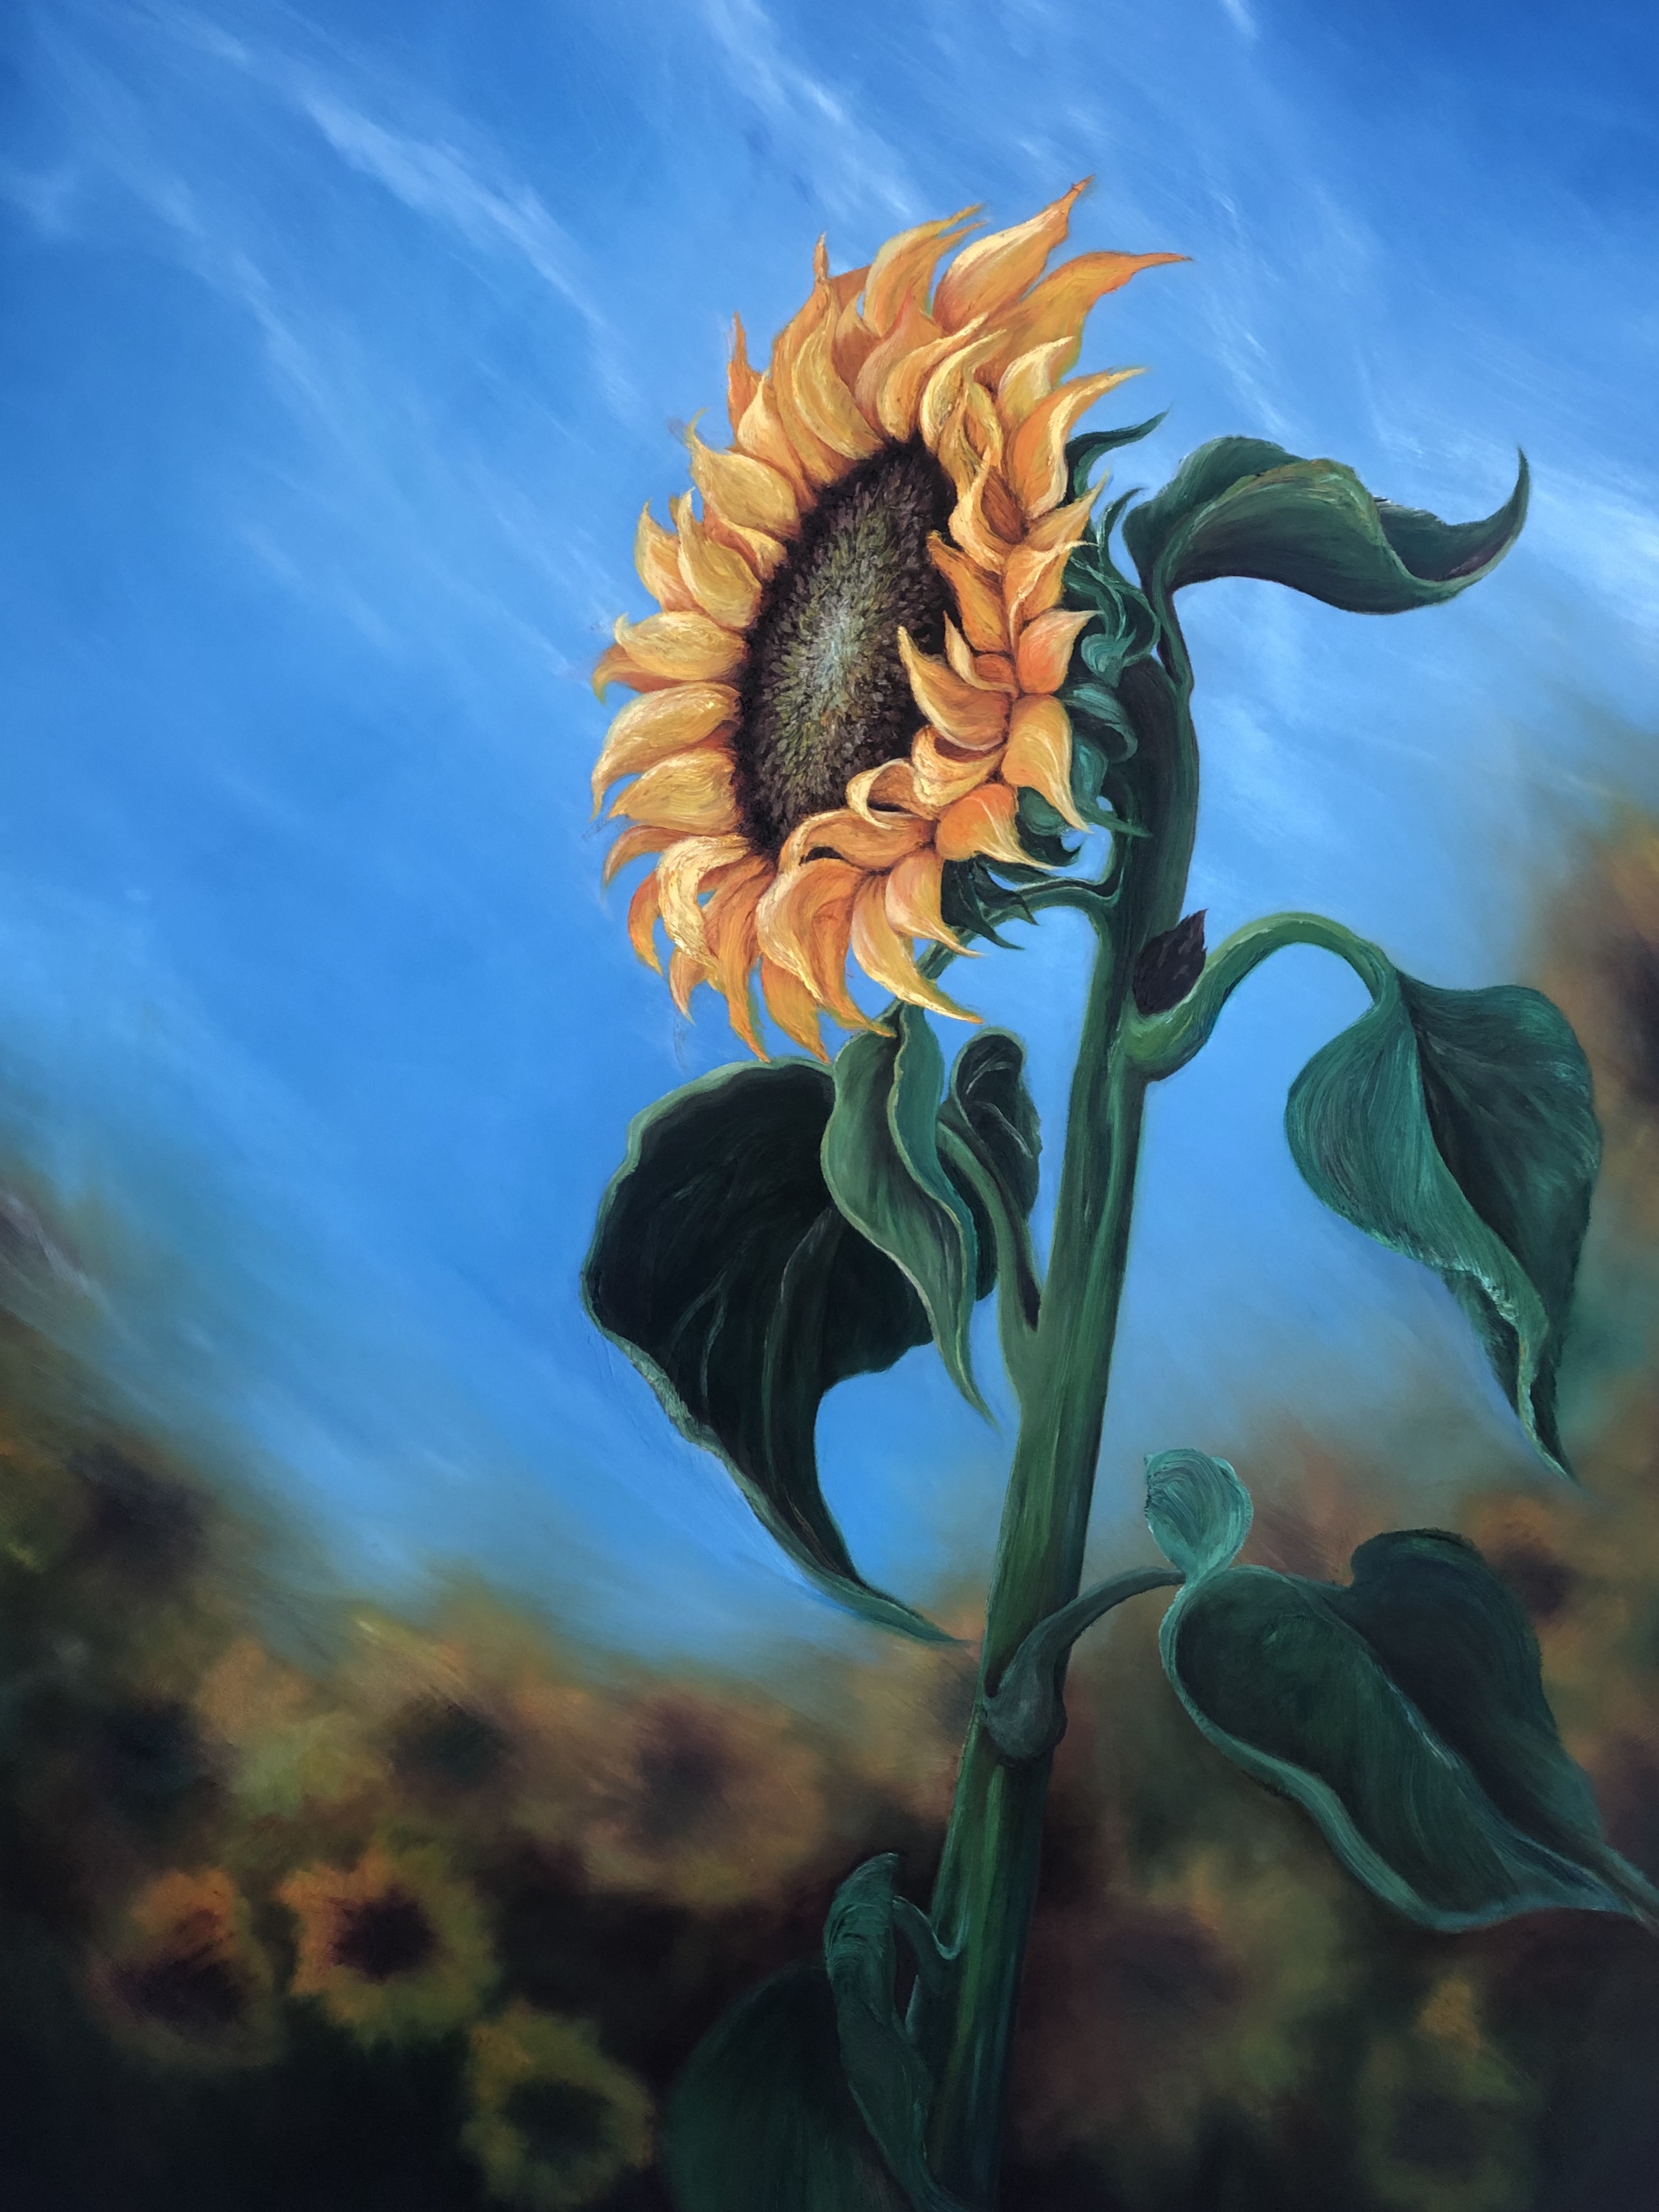 Sunflower in the Field